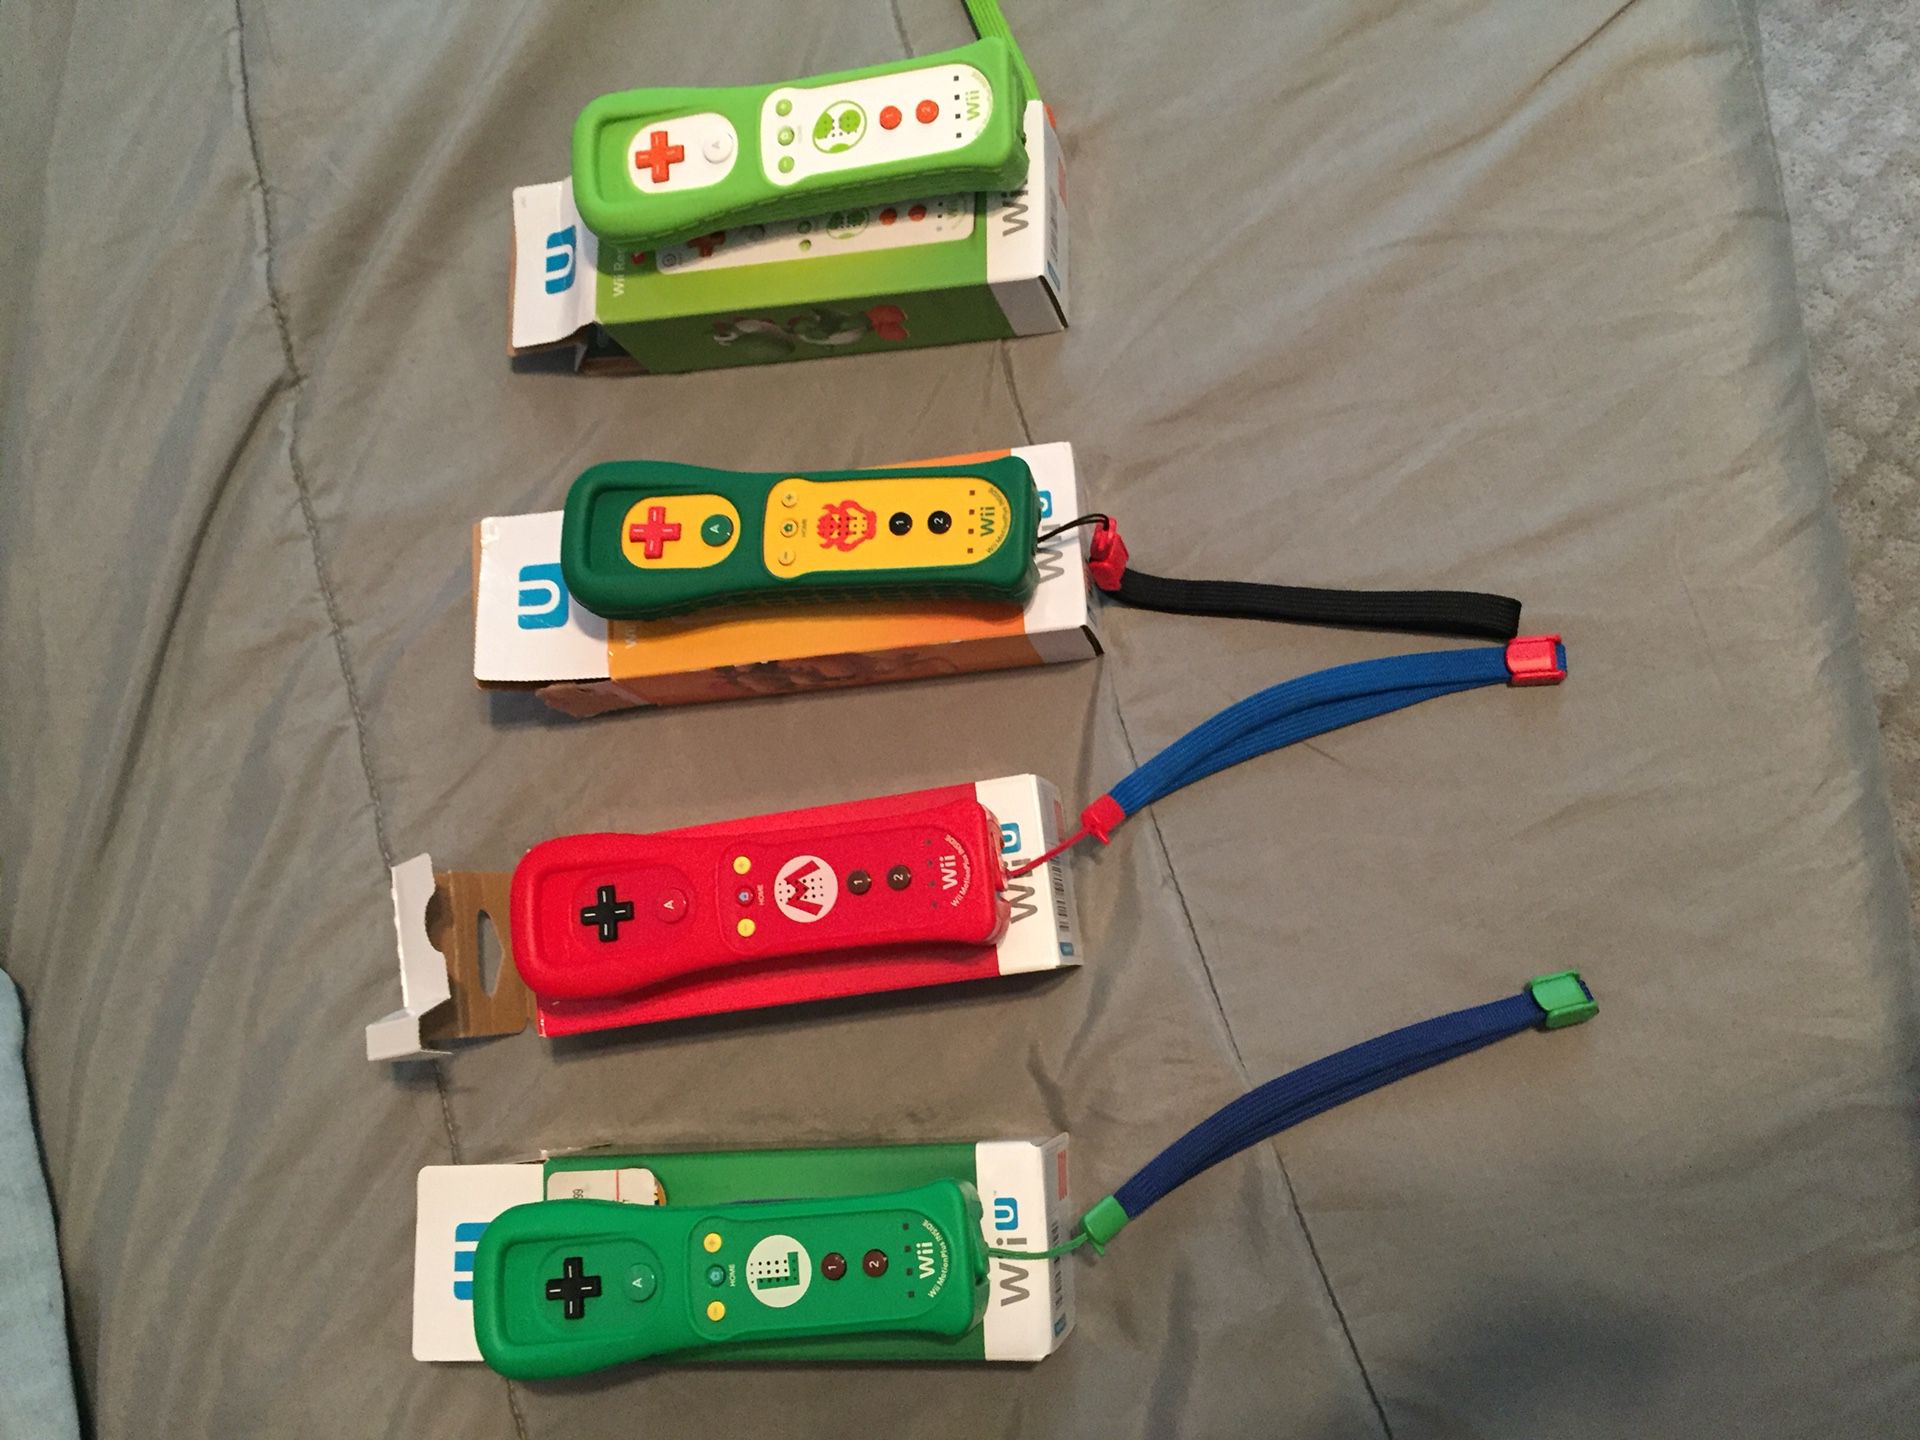 Wii U controllers set of 4